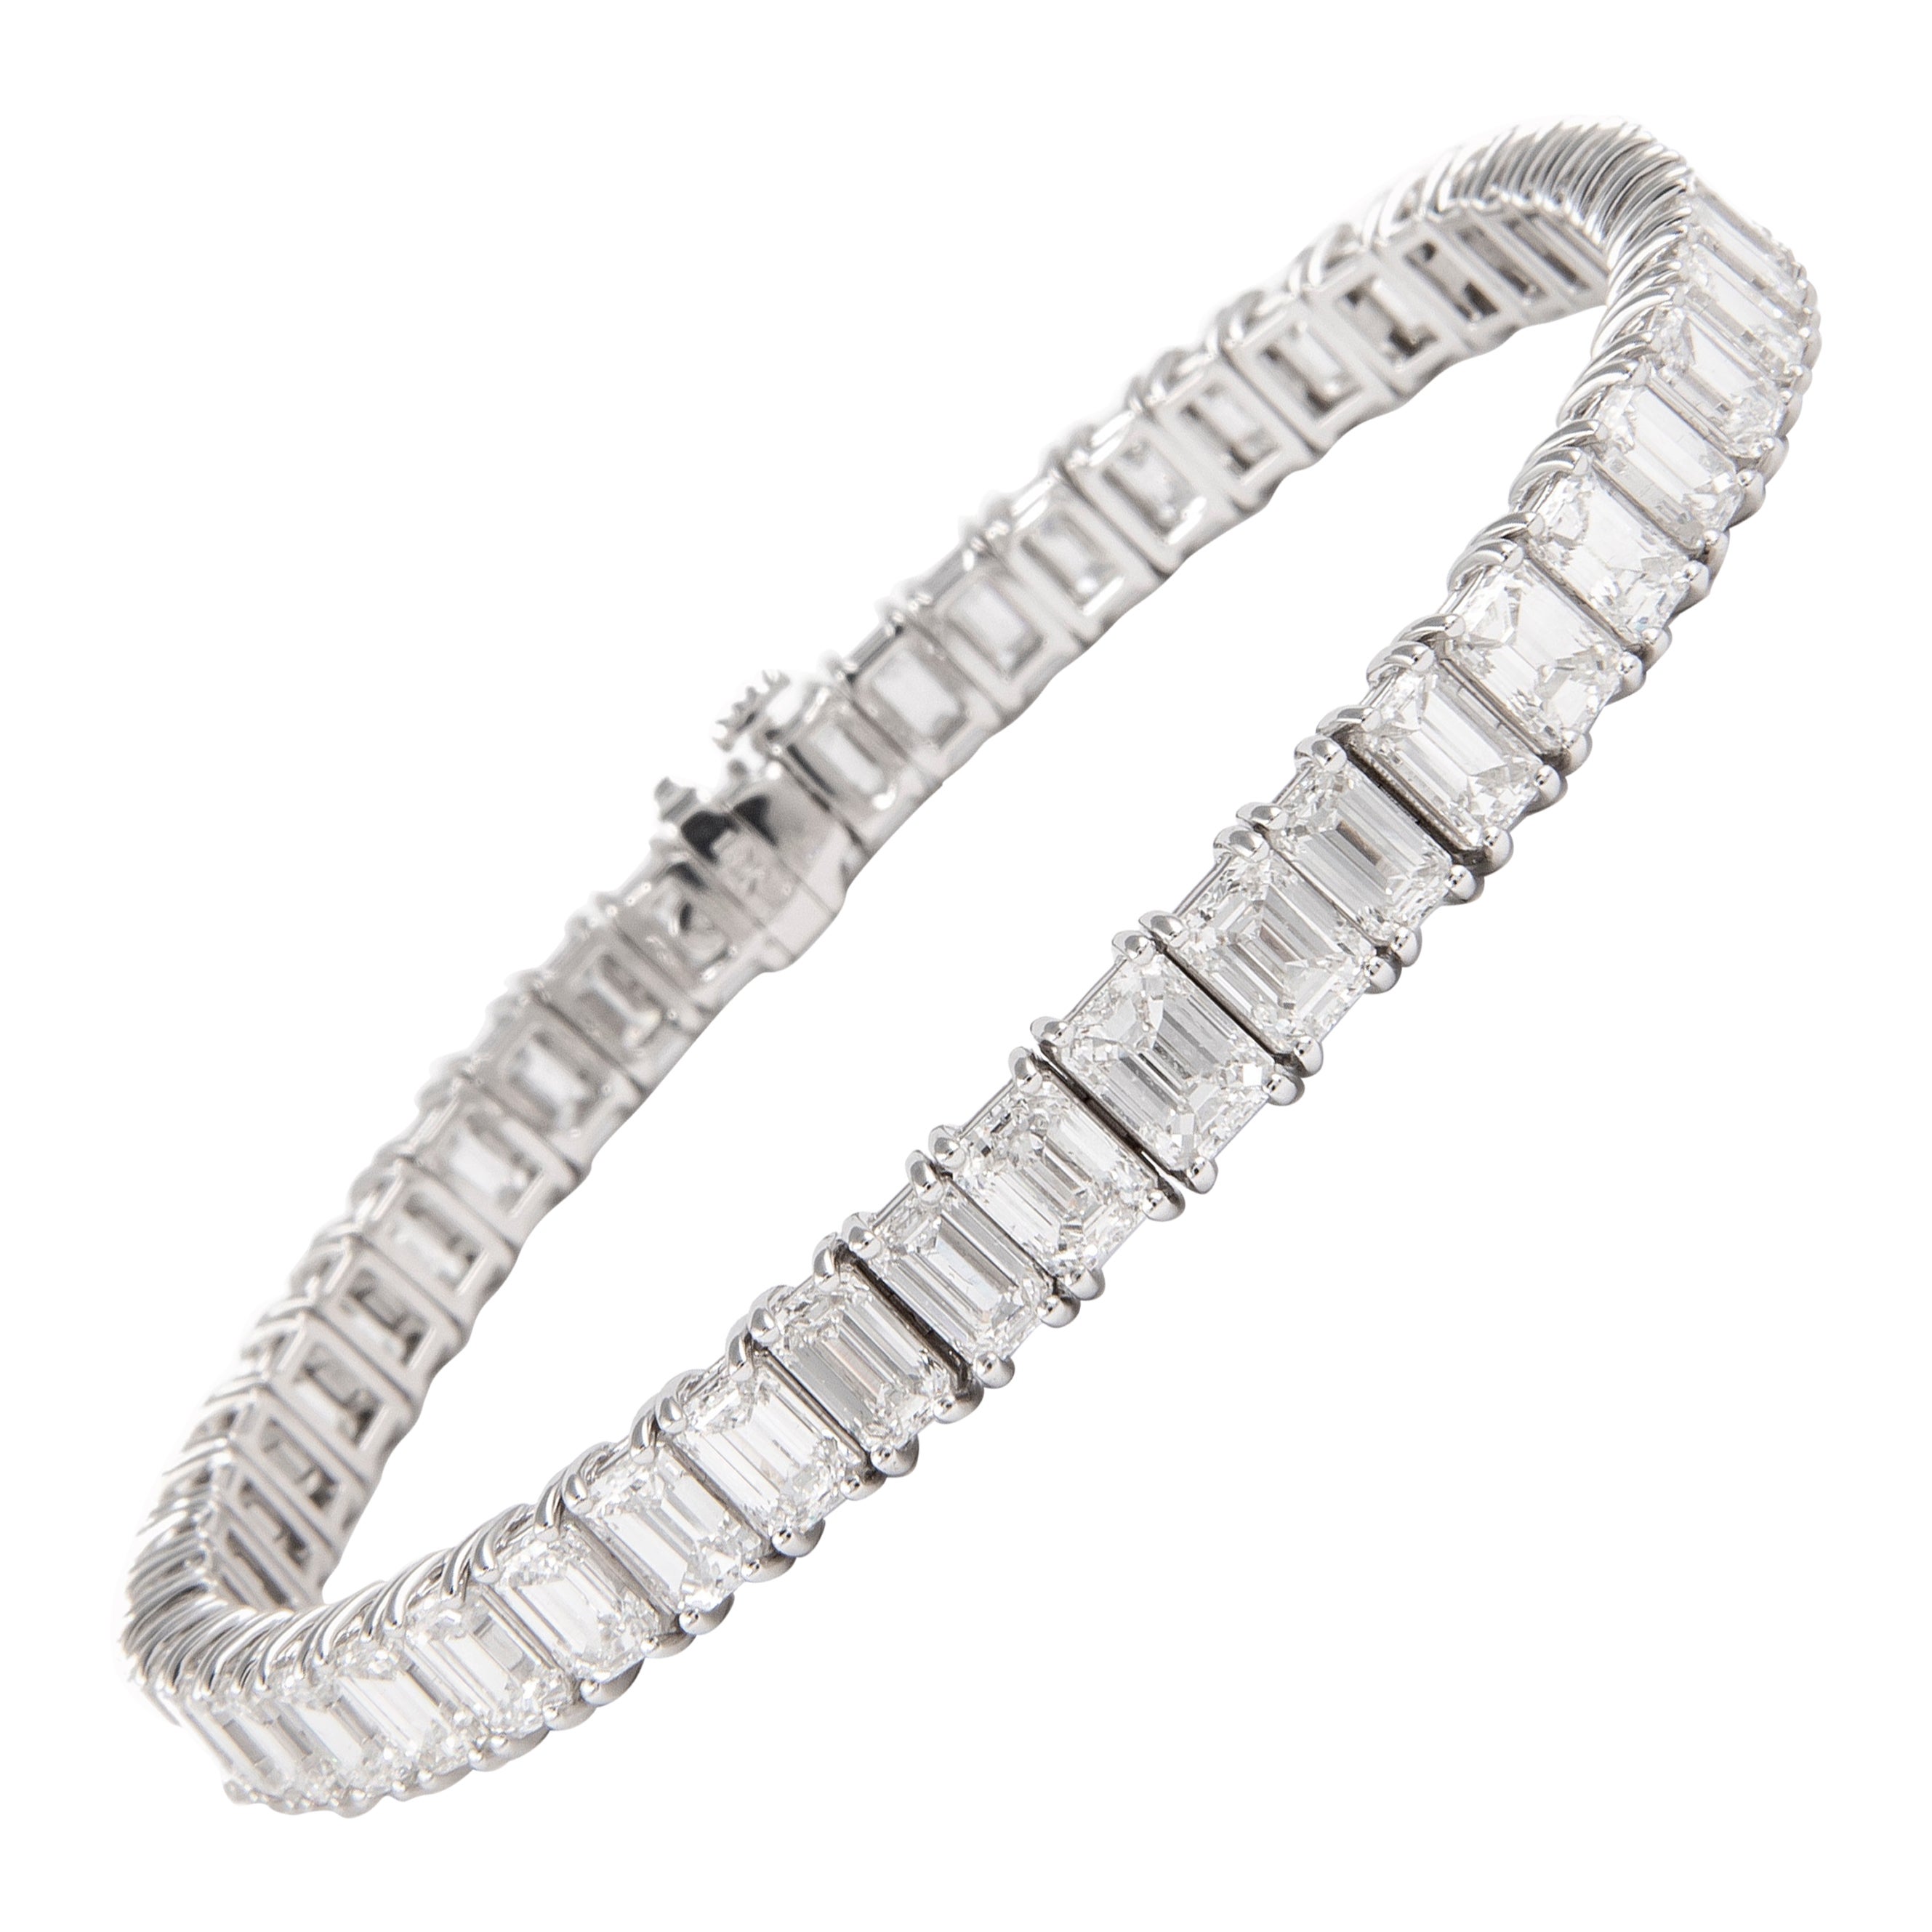 Alexander 17.15 Carat Emerald Cut Diamond Tennis Bracelet 18-Karat White Gold For Sale